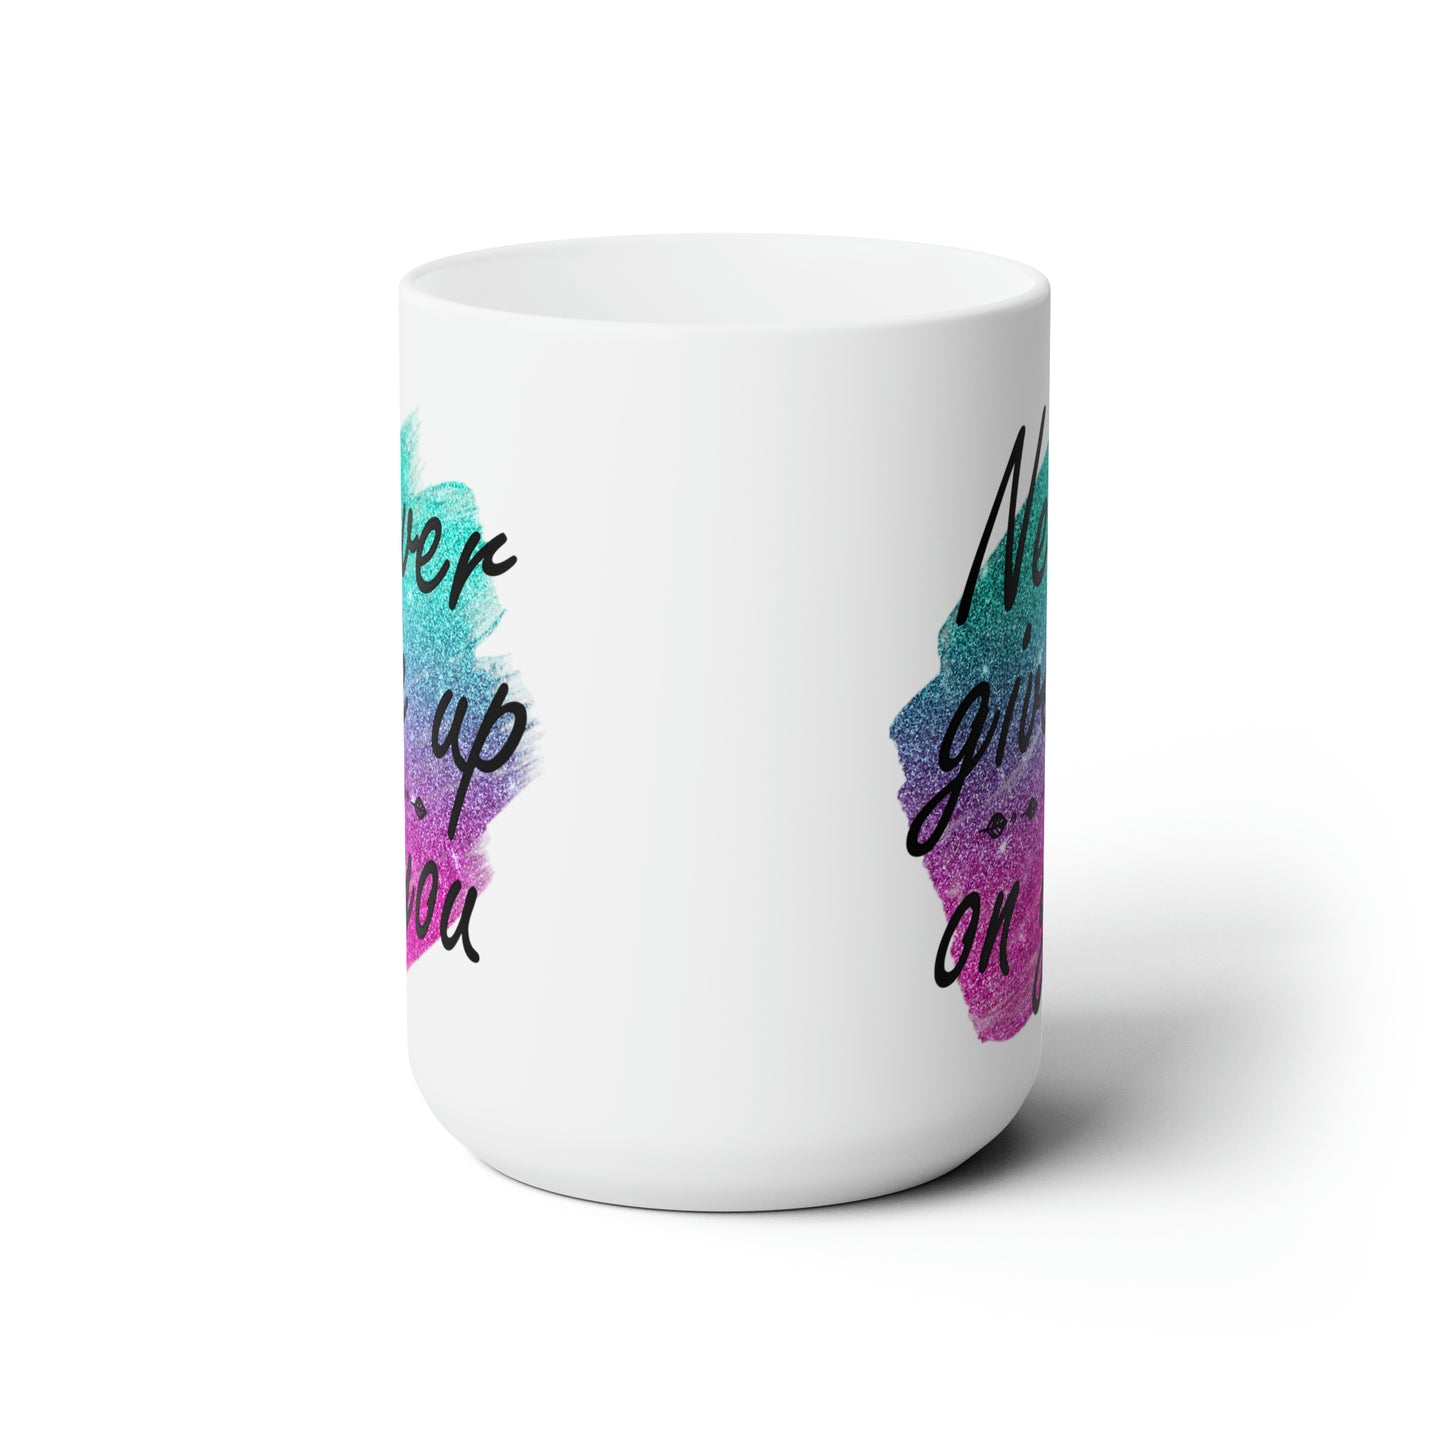 Never Give Up 15 oz. ceramic mug